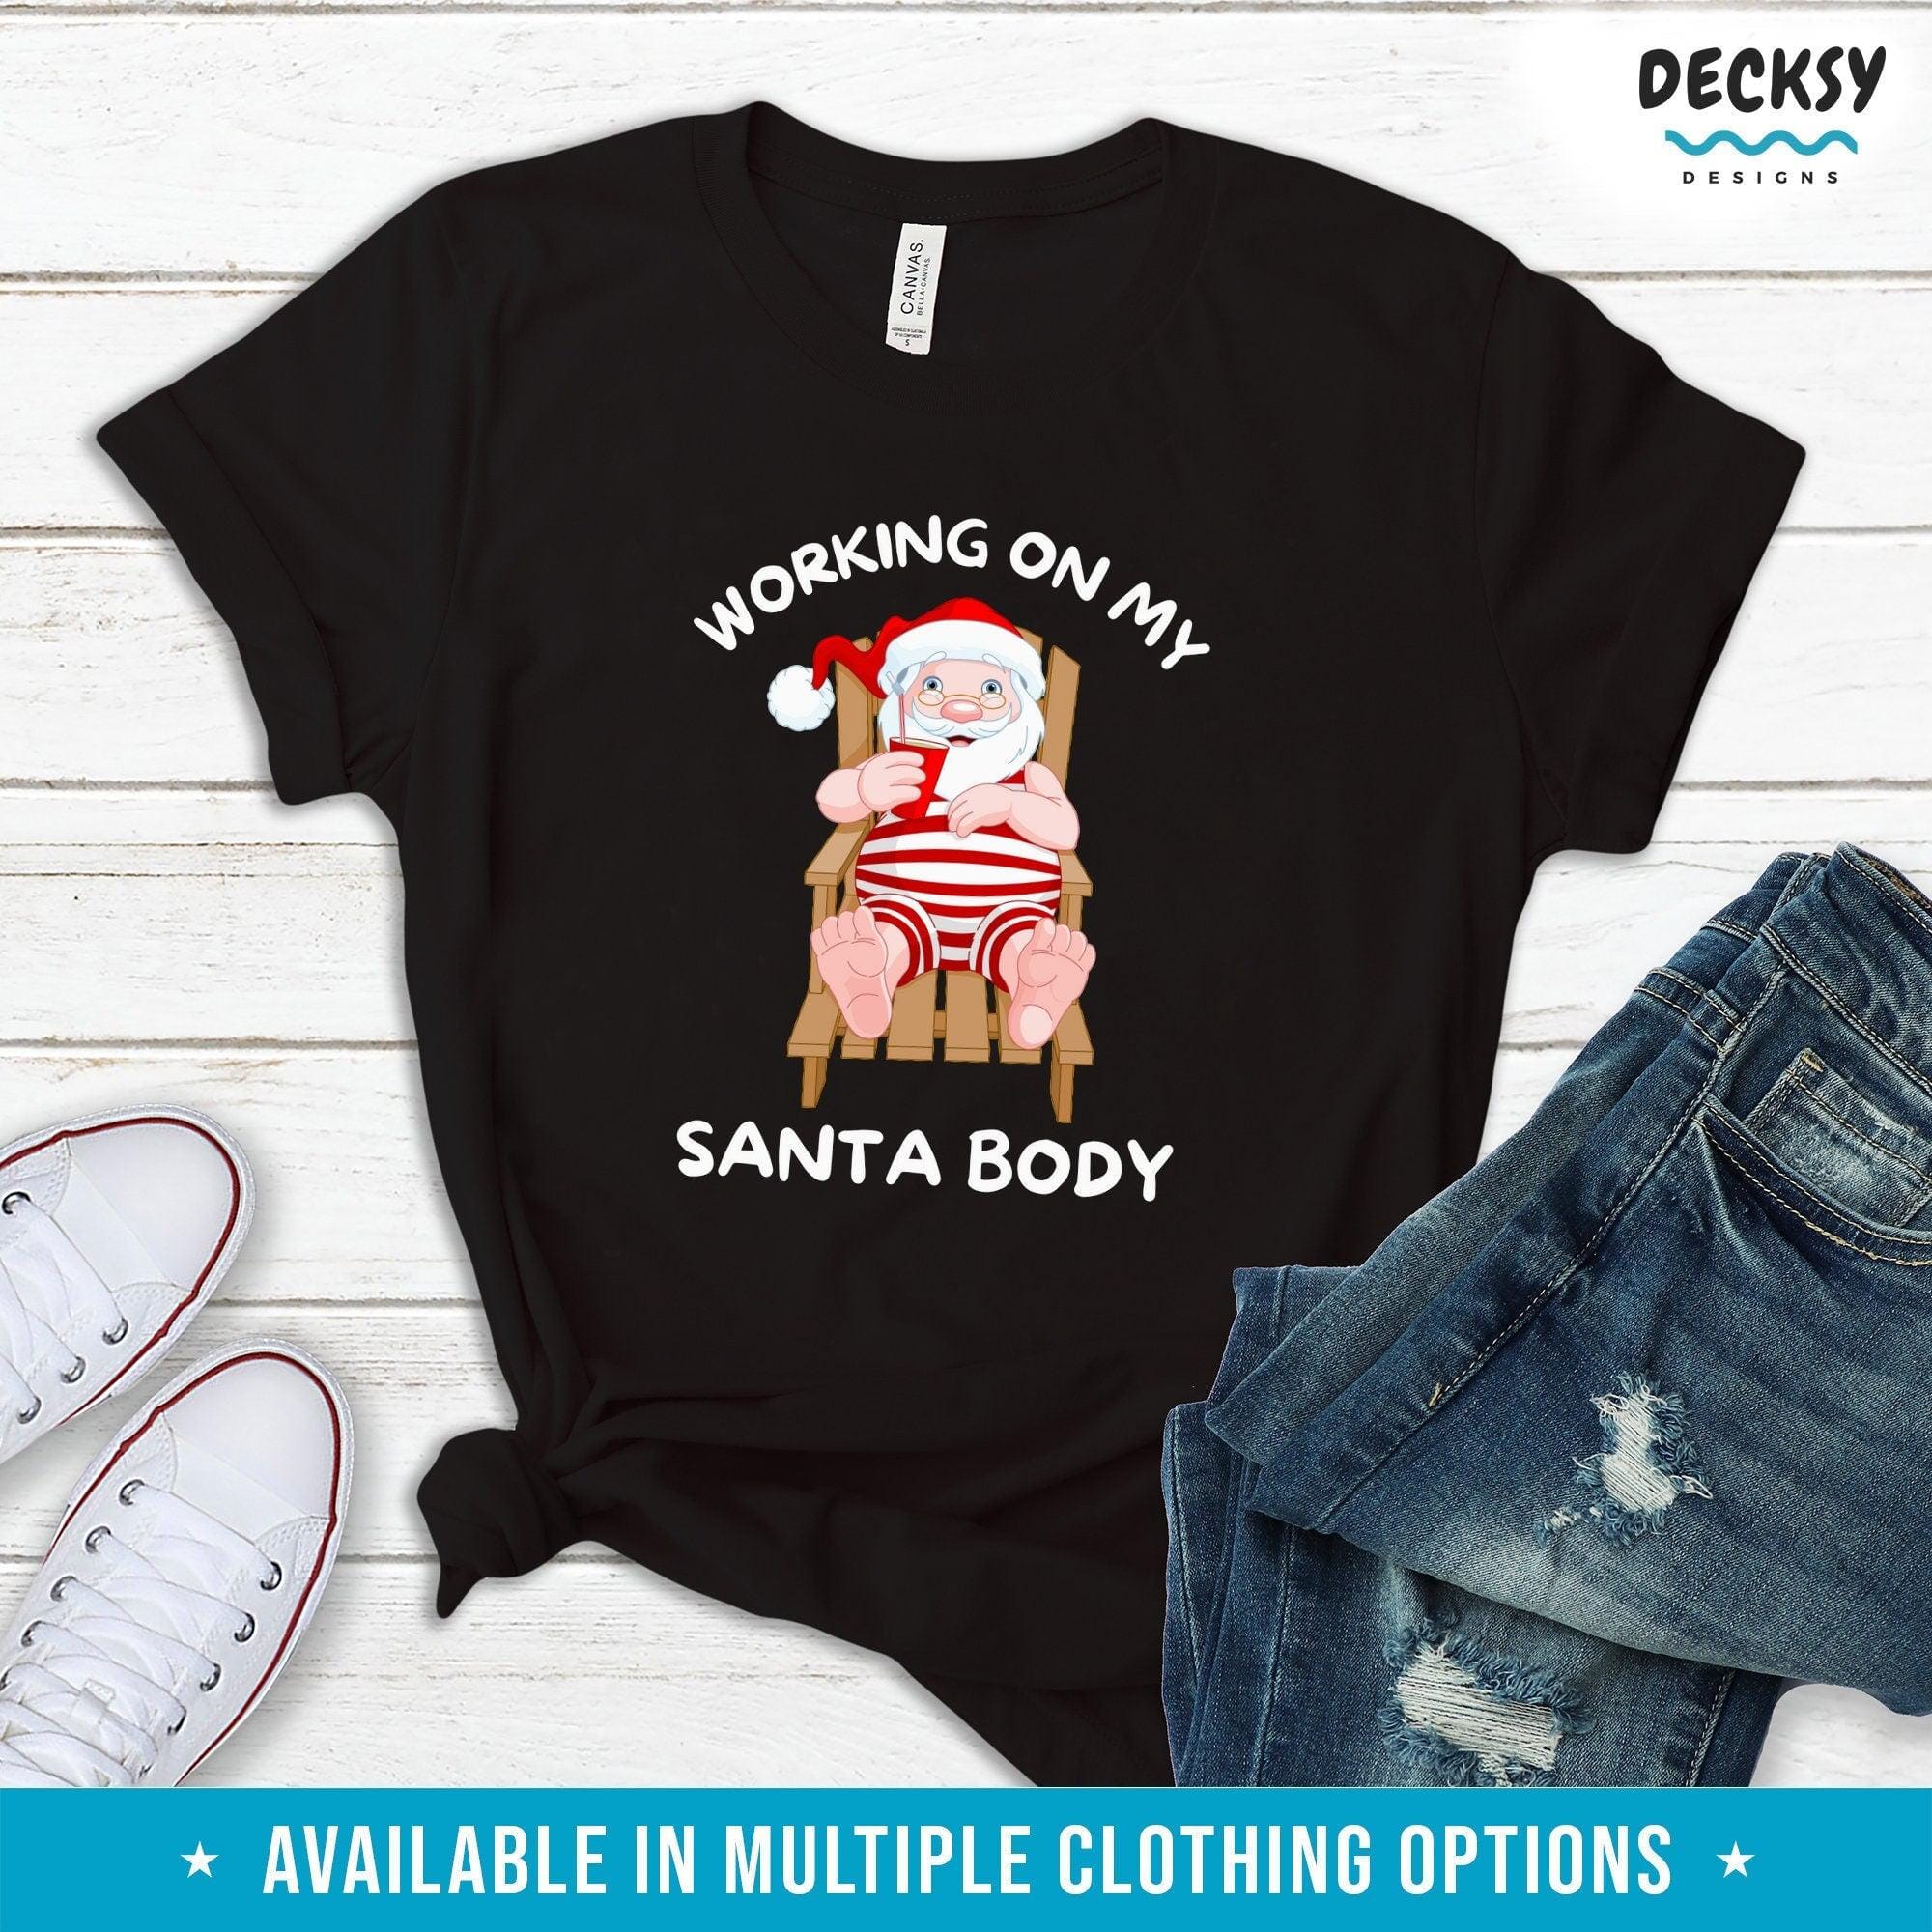 Funny Xmas Tshirt, Christmas Gift-Clothing:Gender-Neutral Adult Clothing:Tops & Tees:T-shirts:Graphic Tees-DecksyDesigns